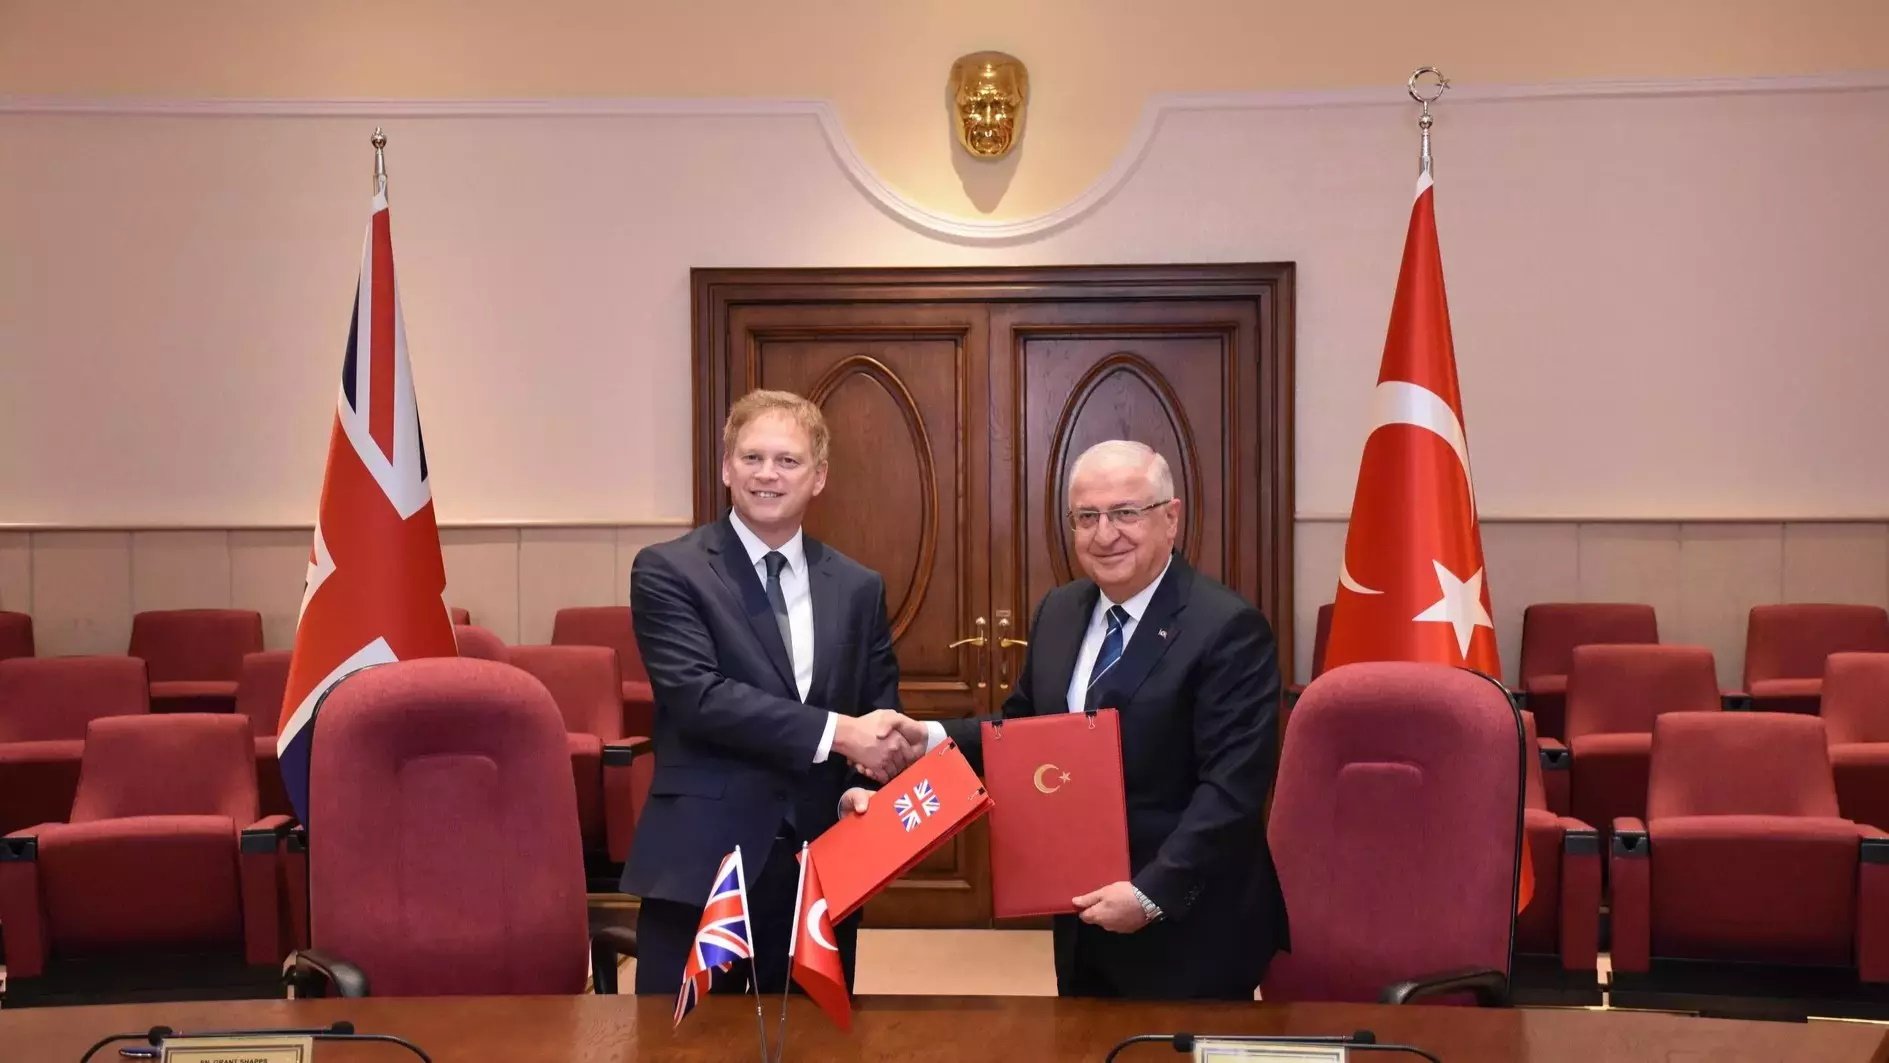 Türkiye, UK sign a deal to boost security, defense ties